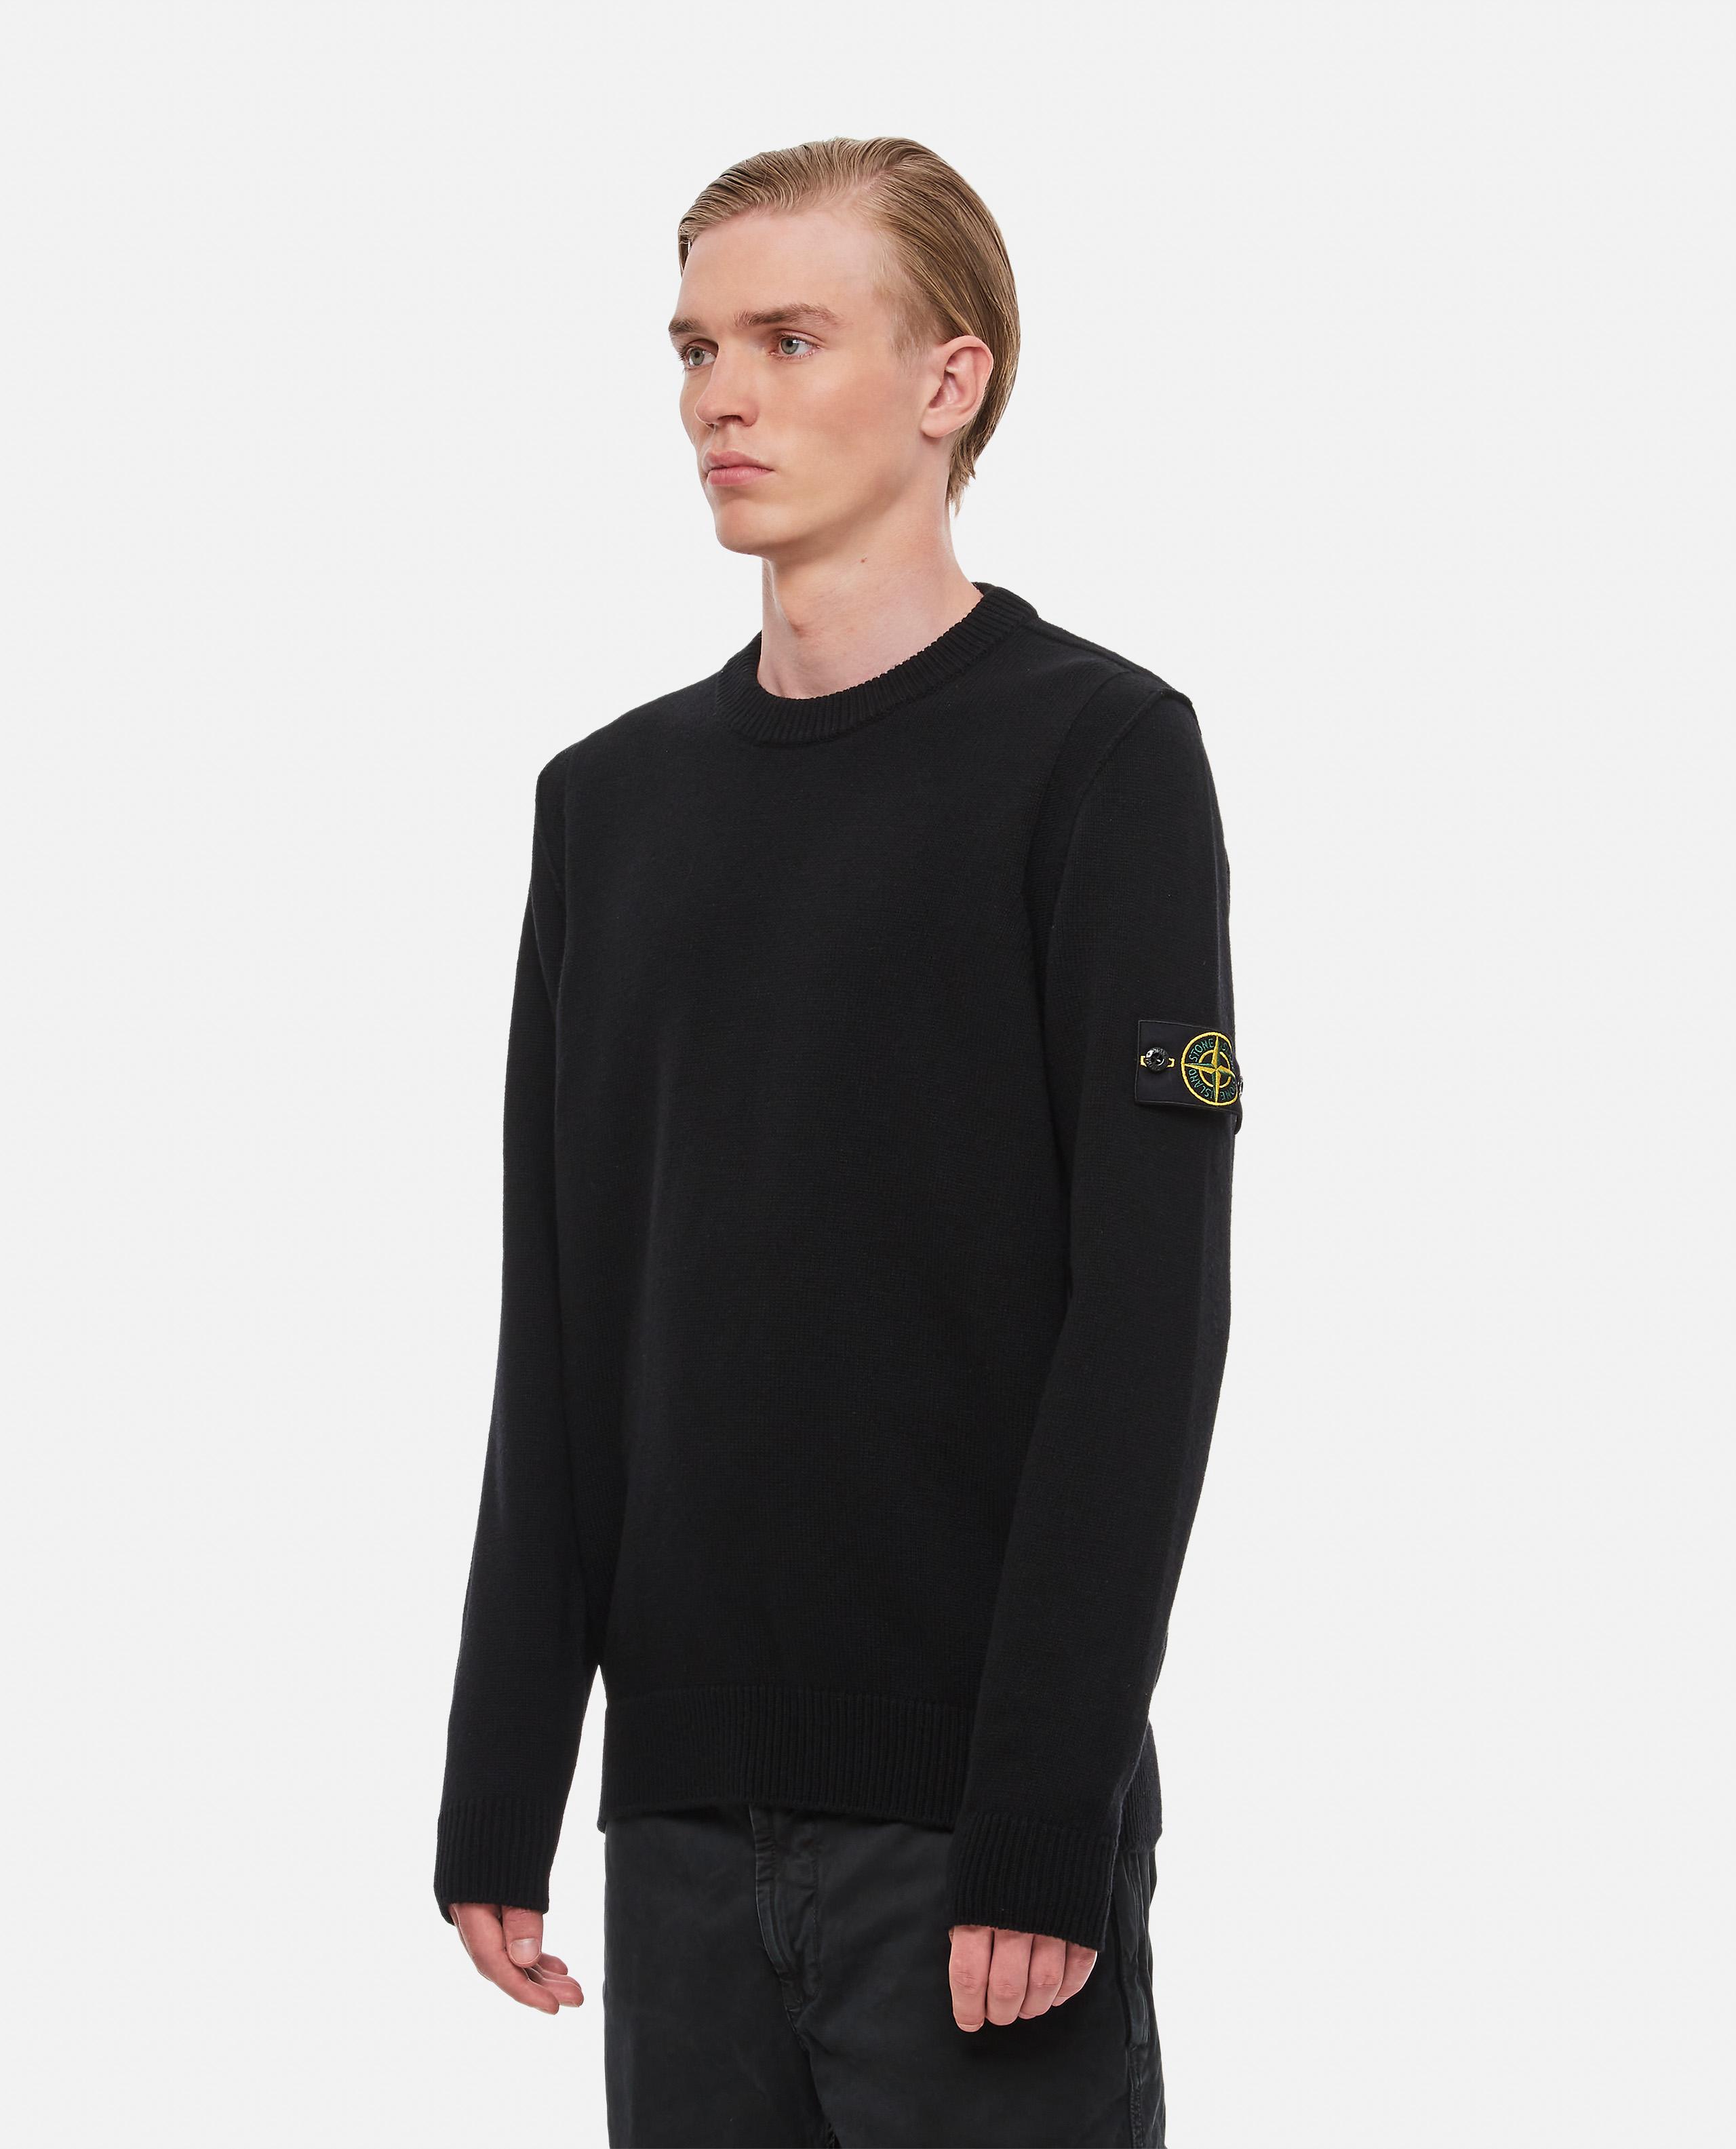 Stone Island Wool Sweater in Black for Men | Lyst